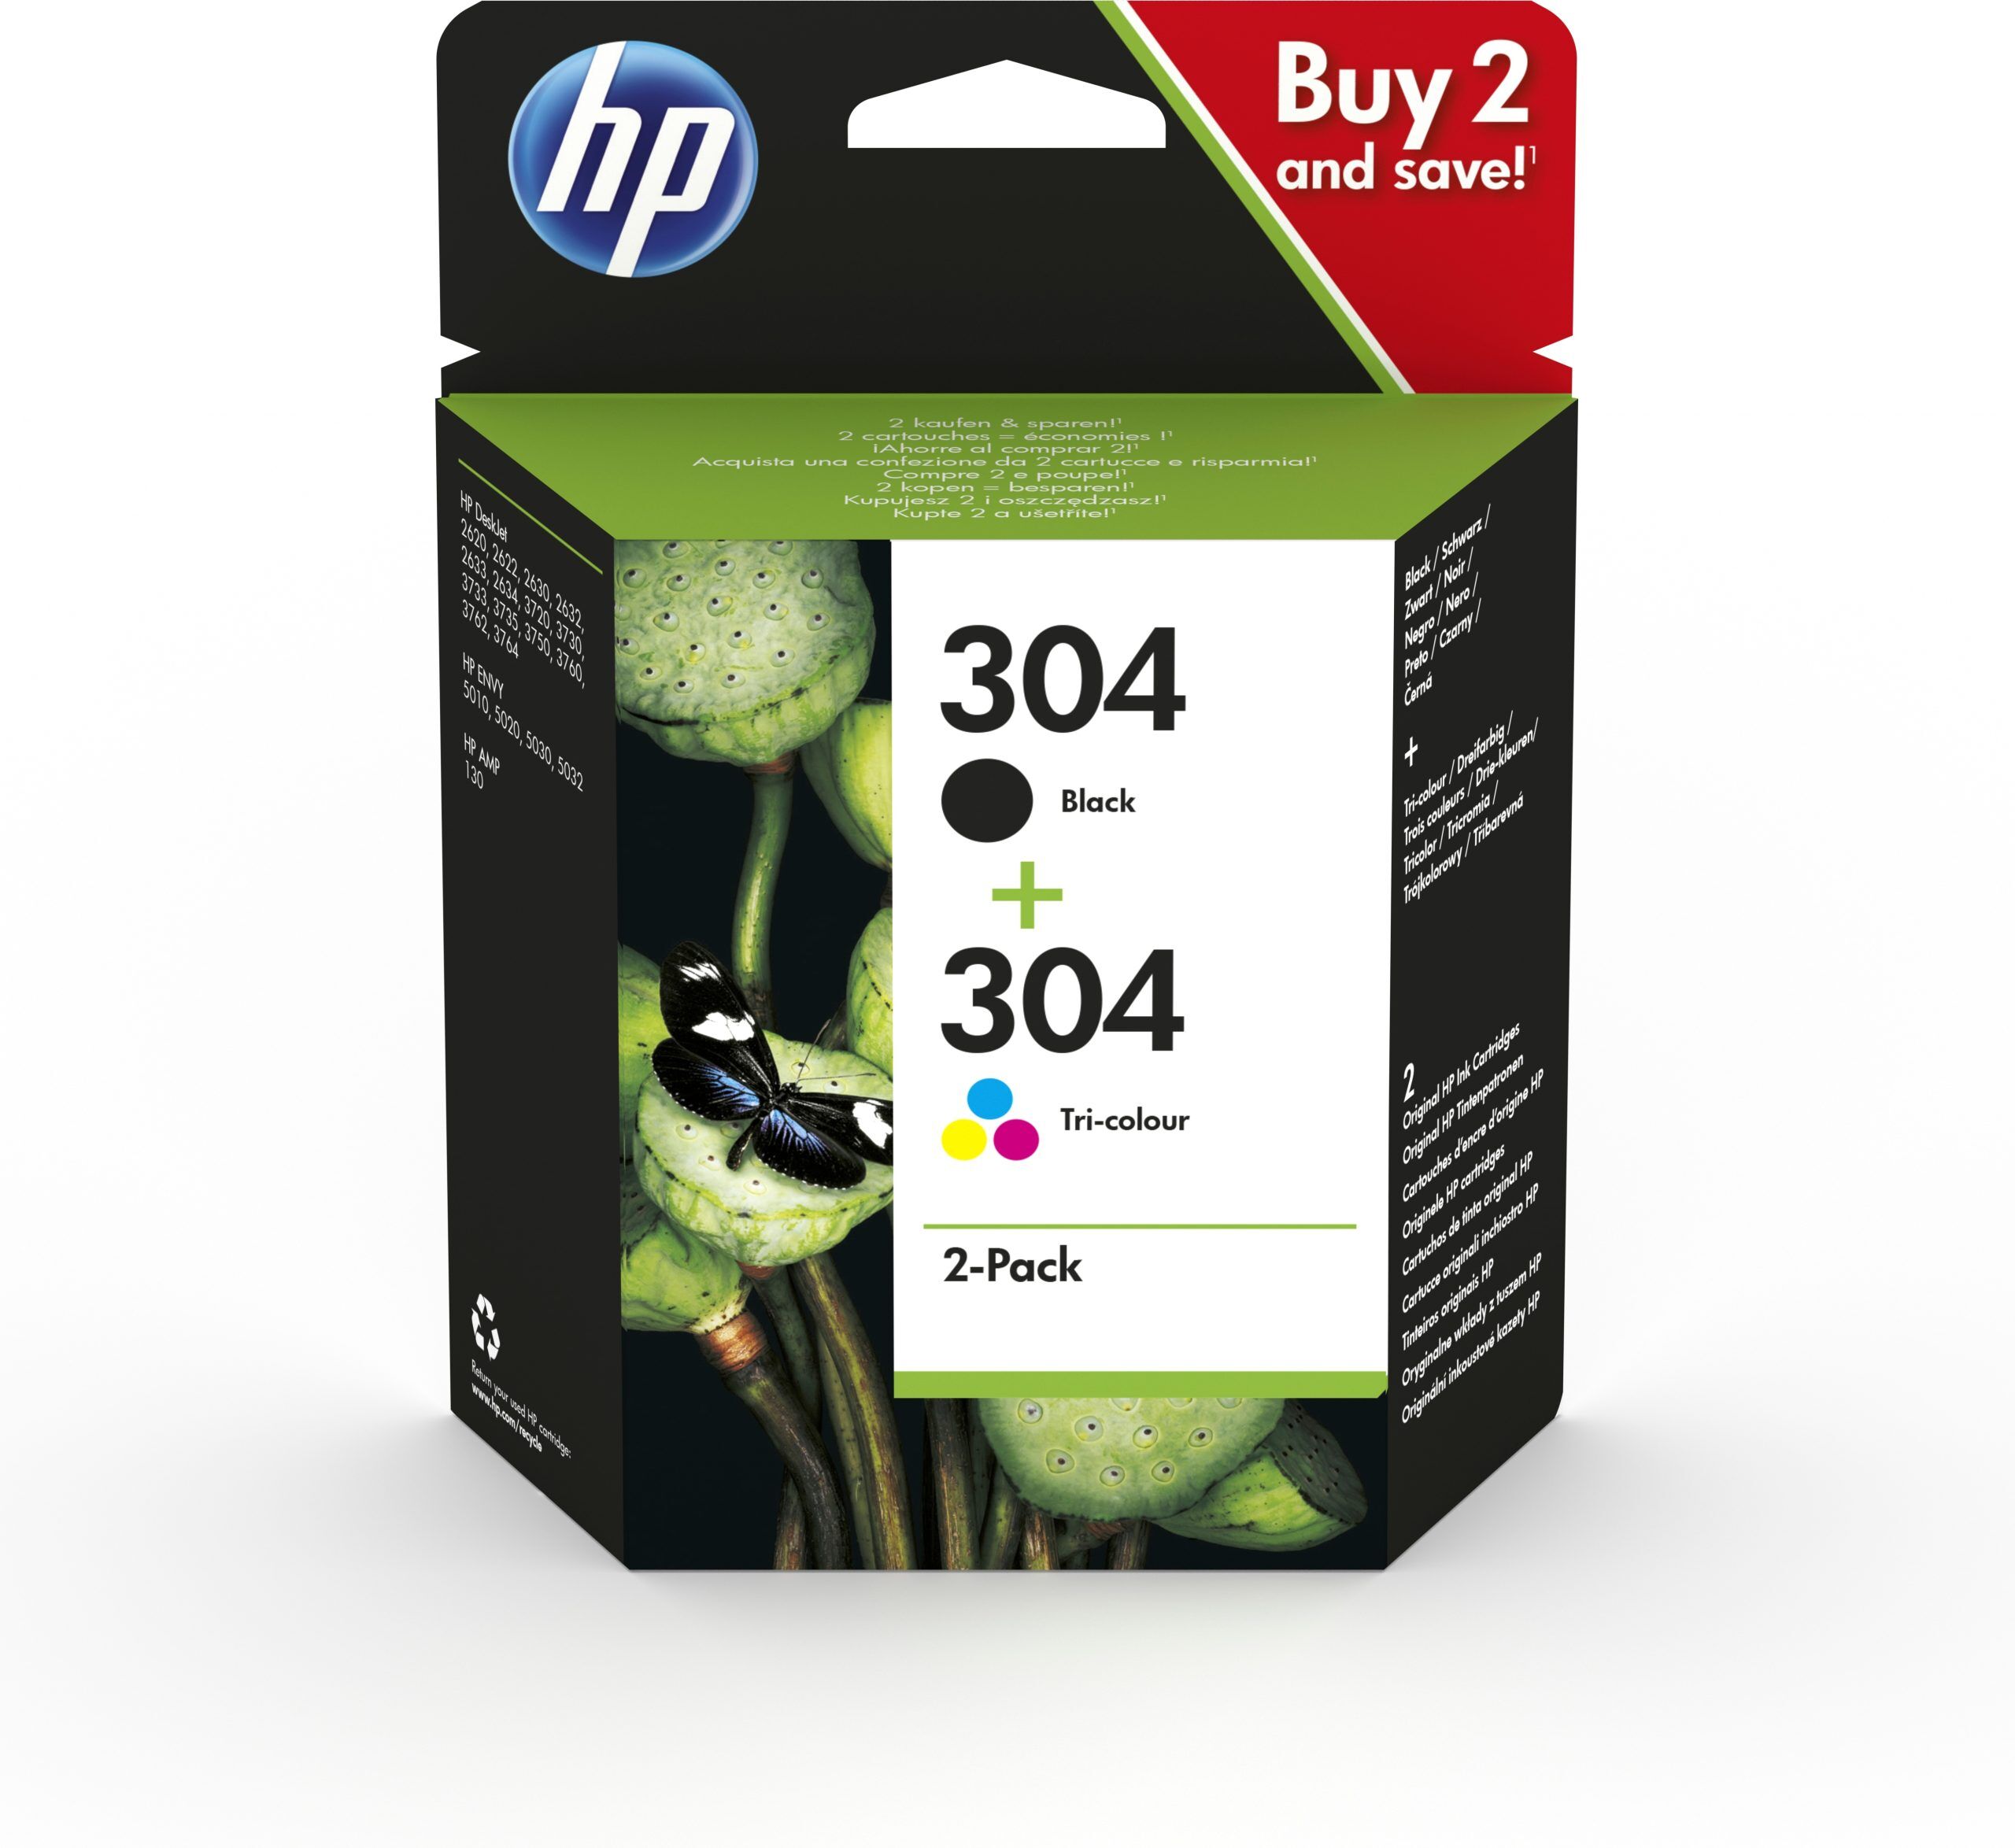 HP Originale Cartuccia Hewlett Packard 304 + 304 nero + colore  3JB05AE#301